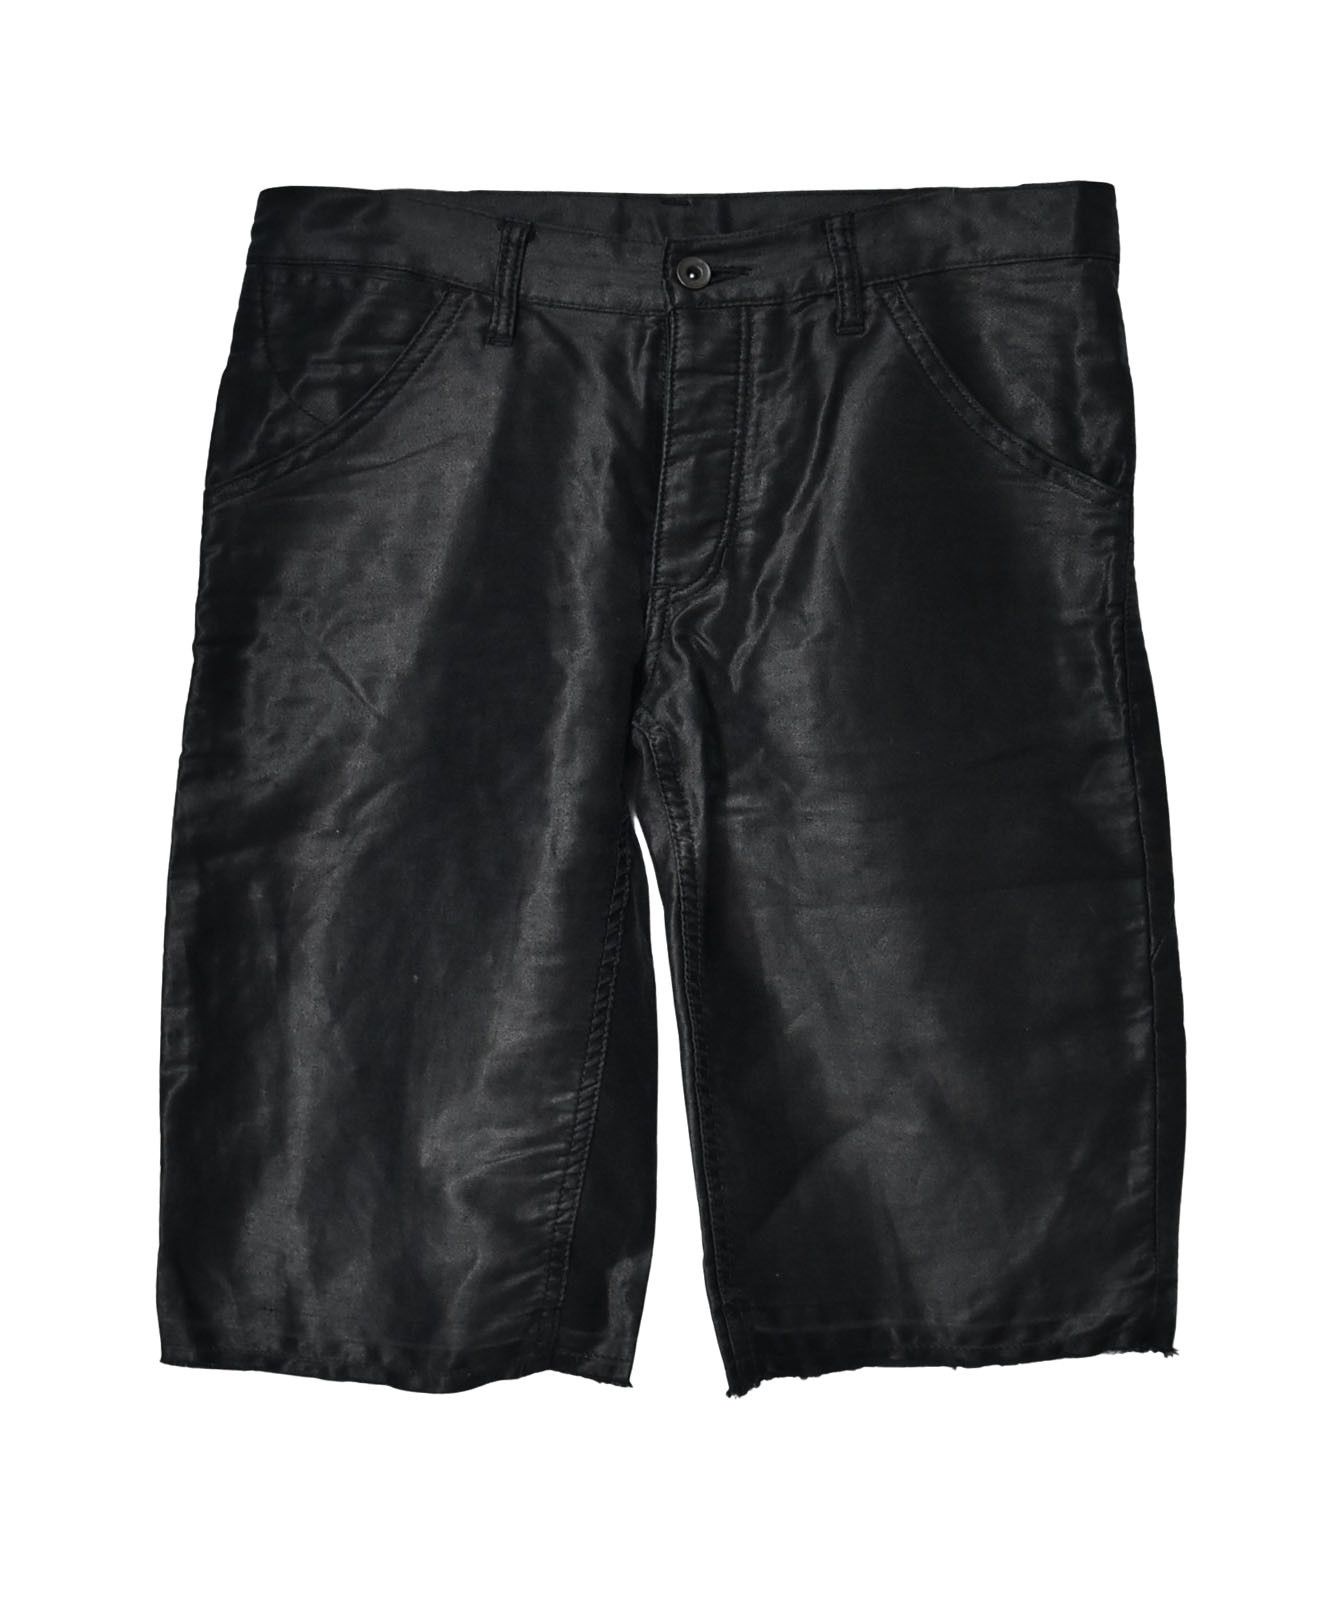 Attachment KAZUYUKI KUMAGAI/cutoff slacks shorts/25990 - 657 55.2 | Grailed